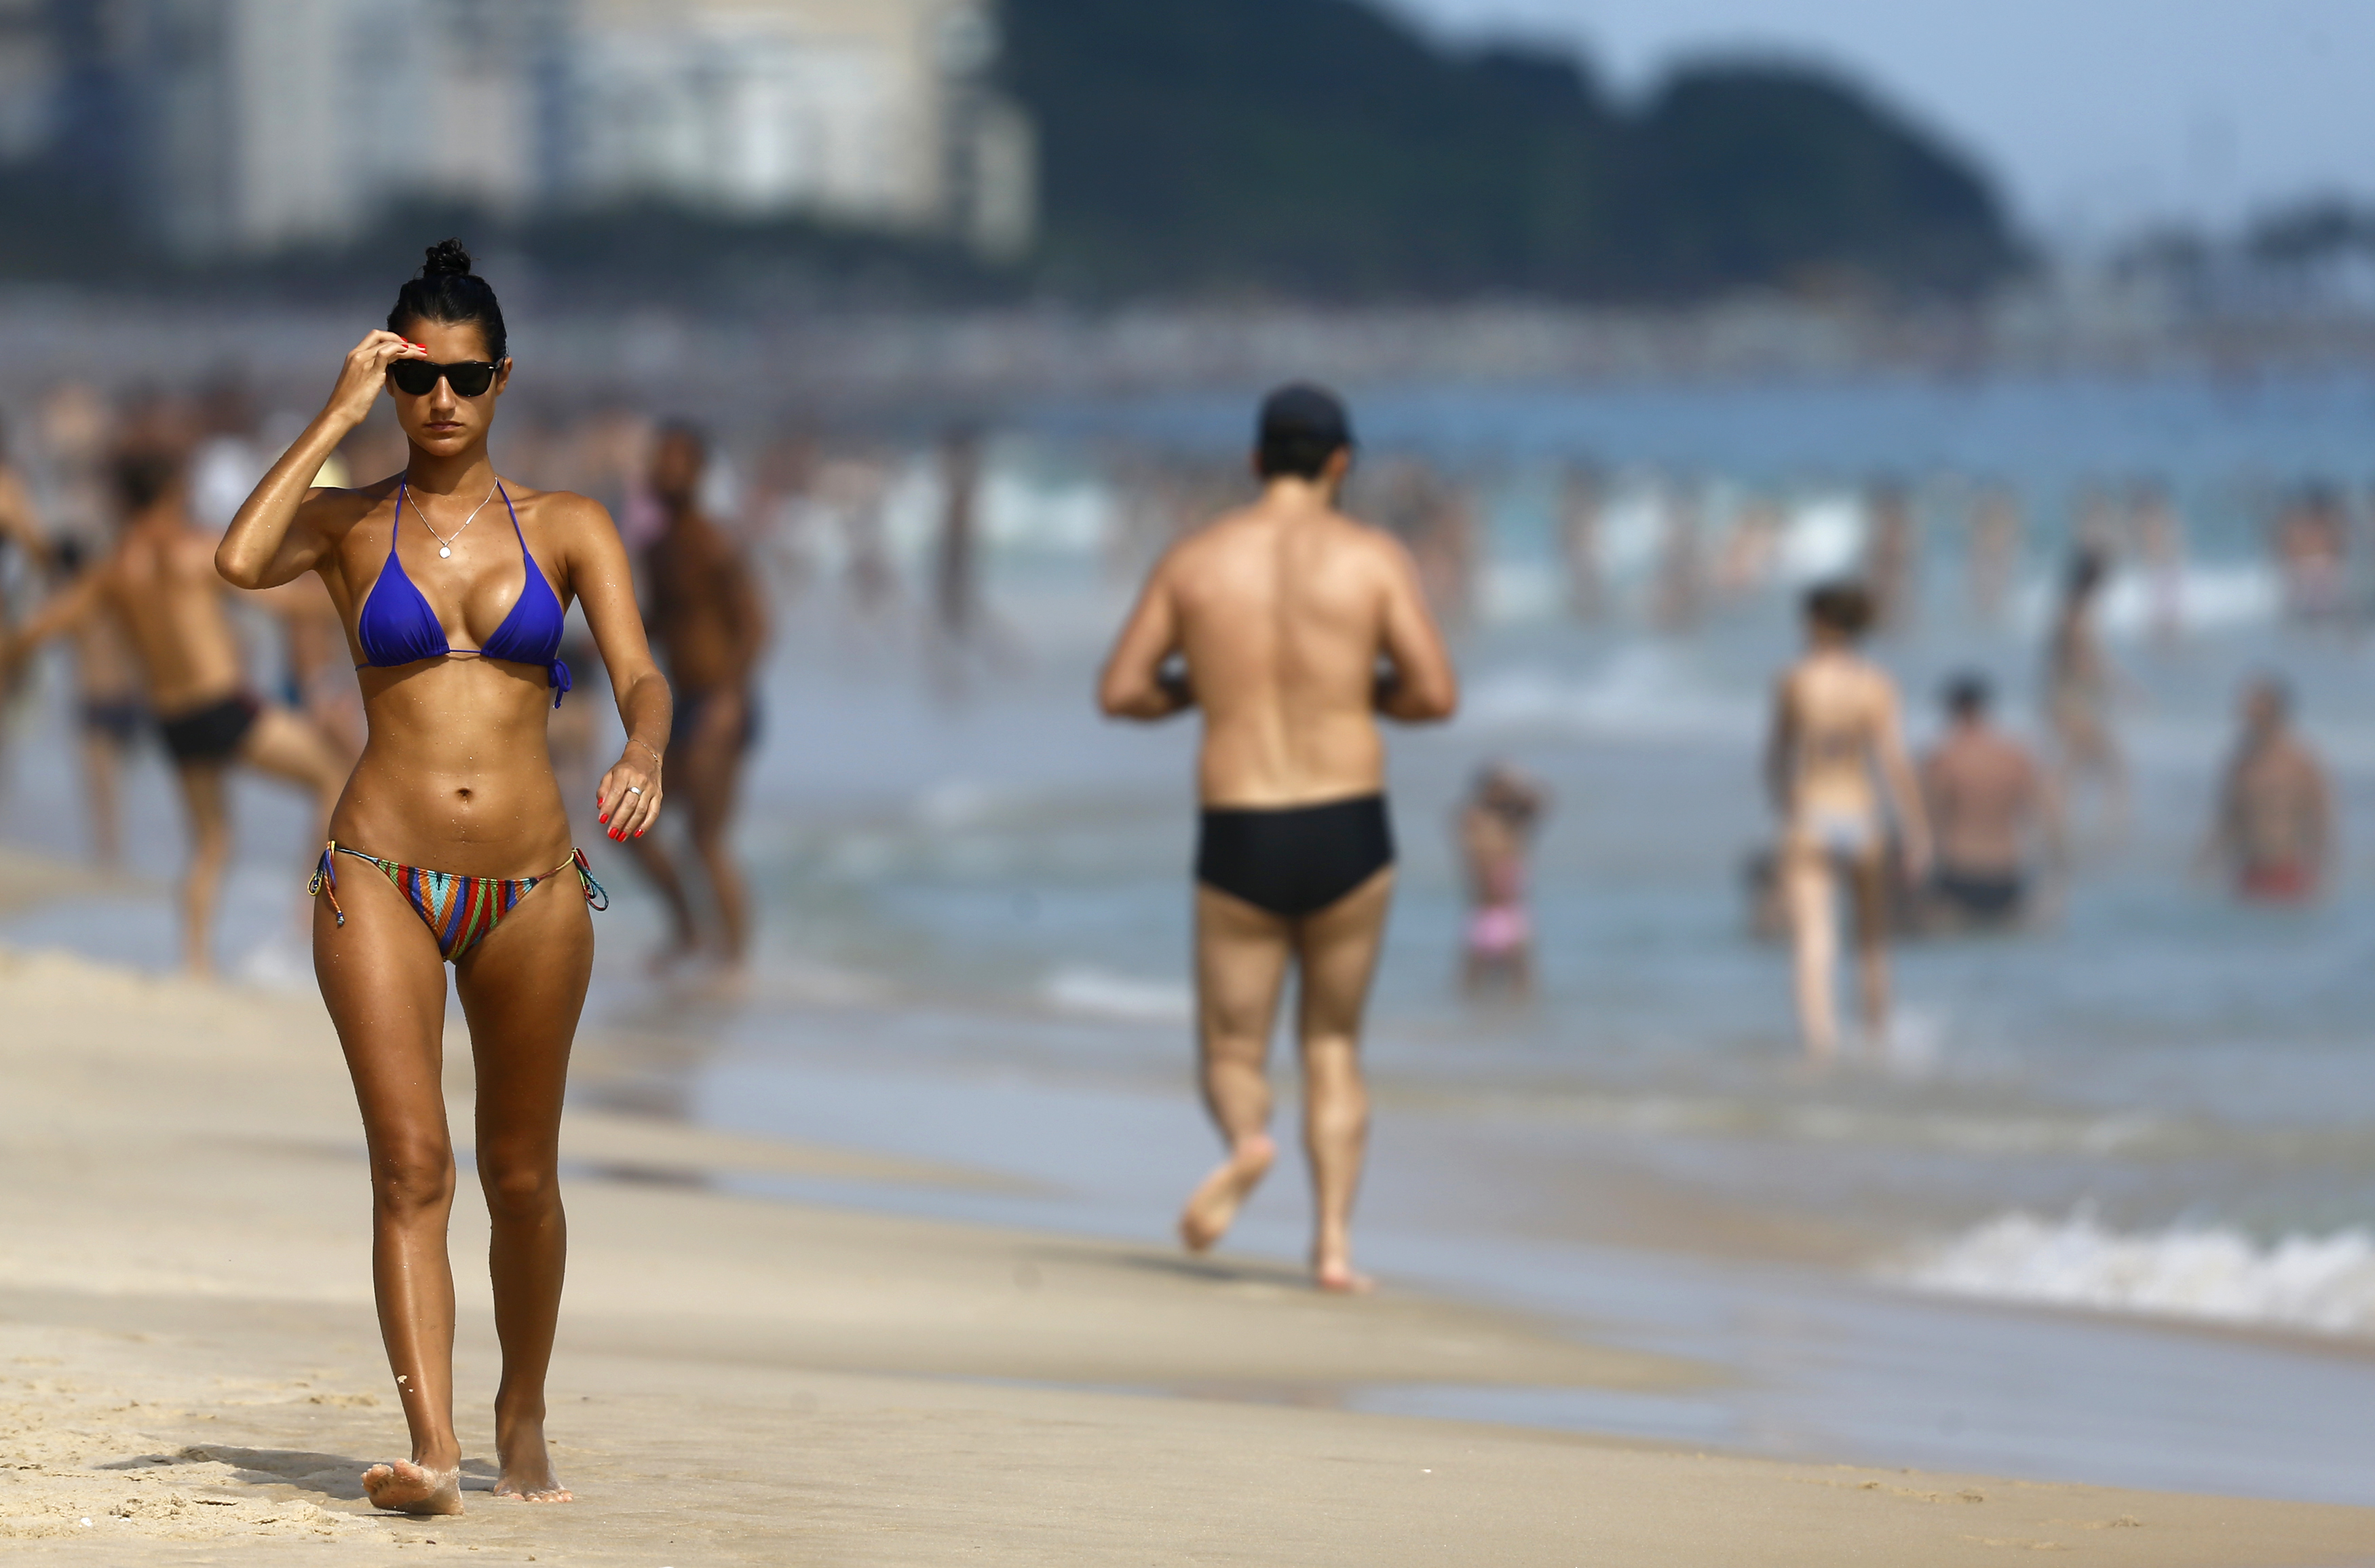 Rio beats the heat at the beach - Brazilians head to the ...